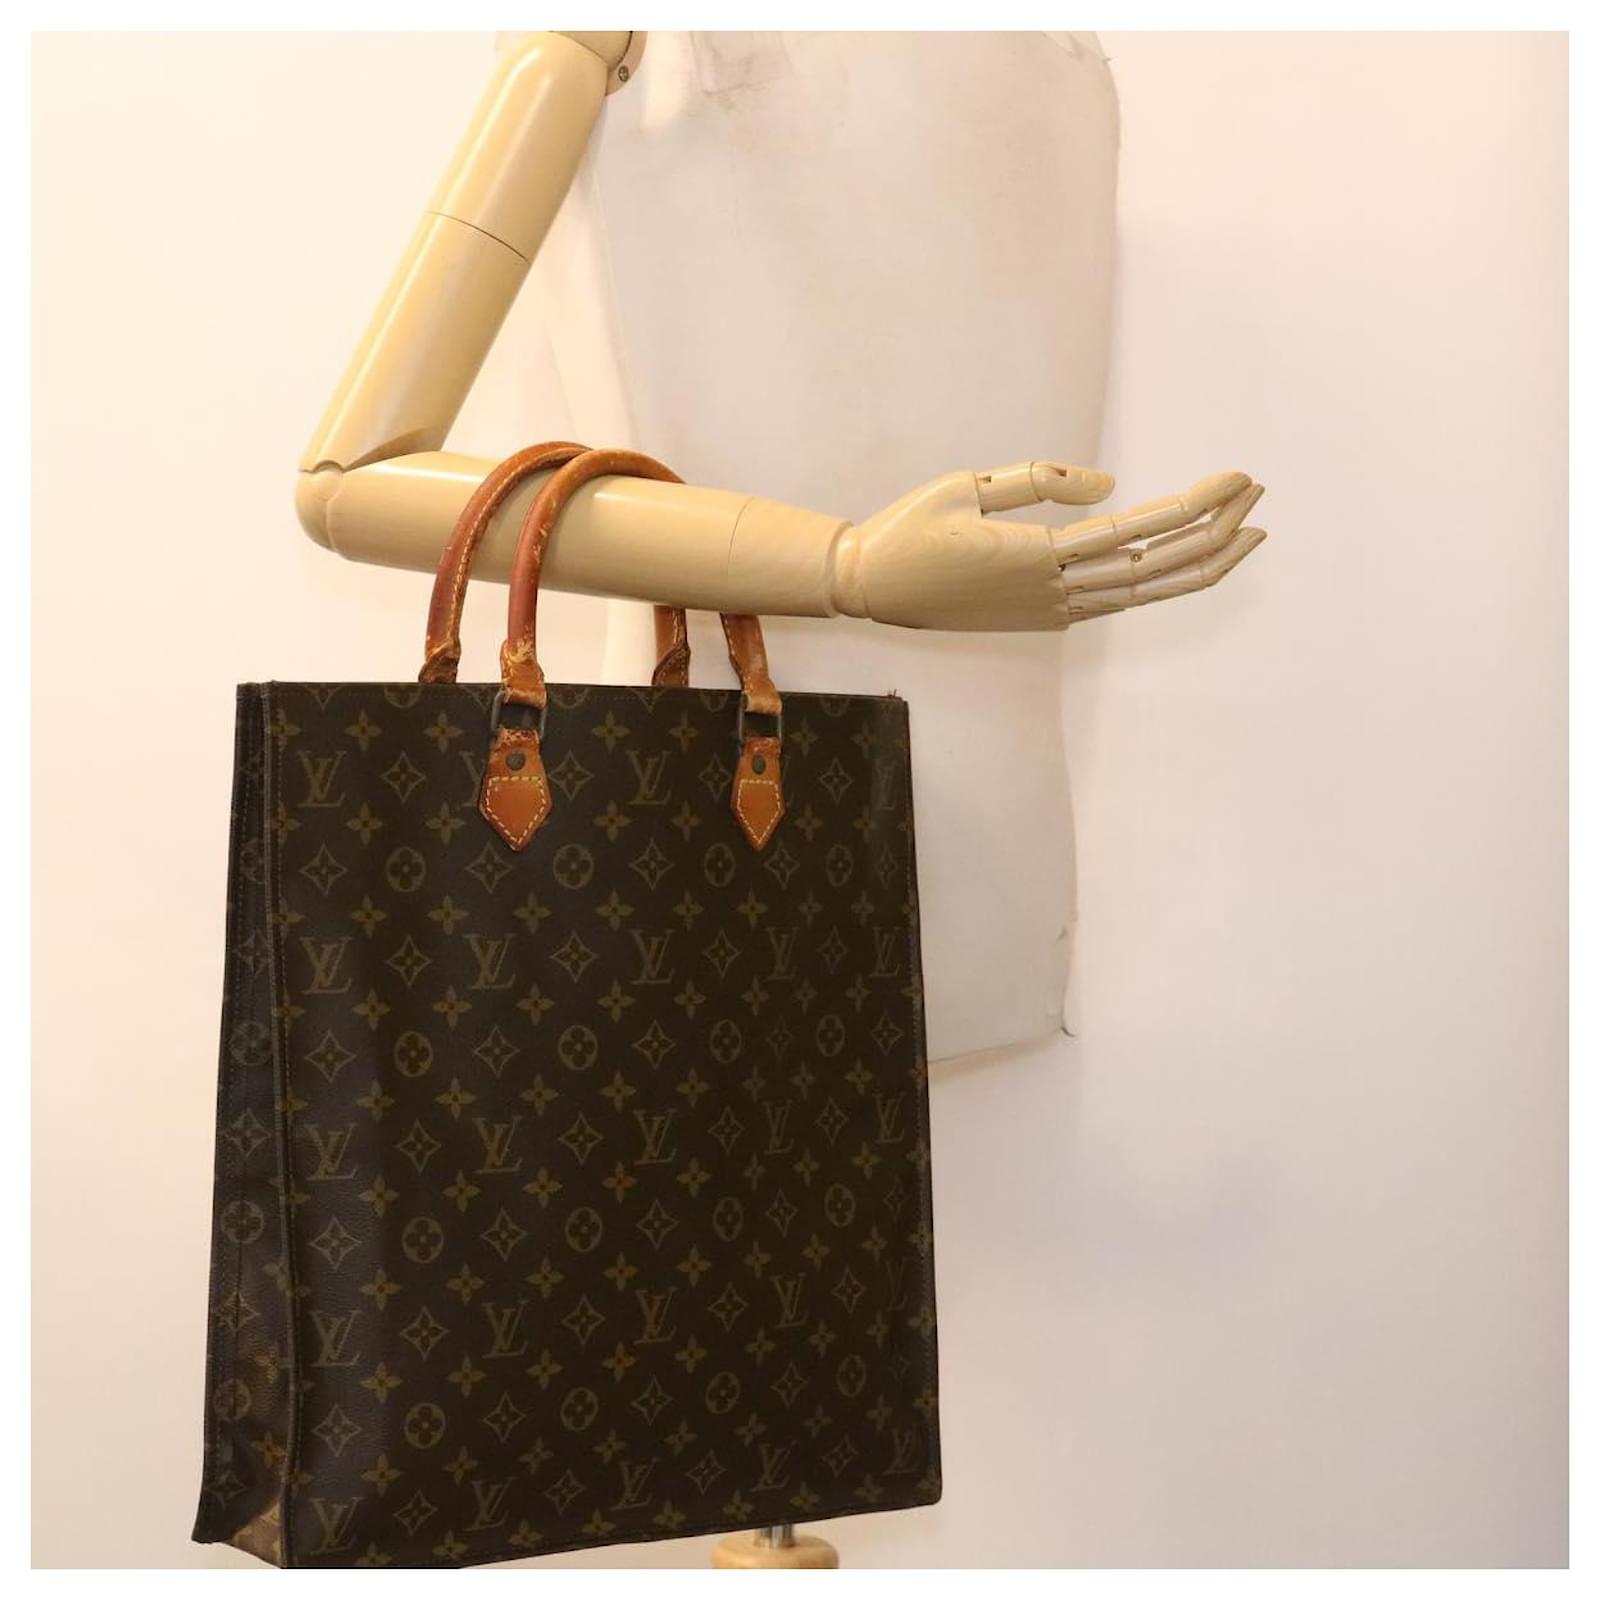 Louis Vuitton Sac Plat Women's Custom Painted Handbag